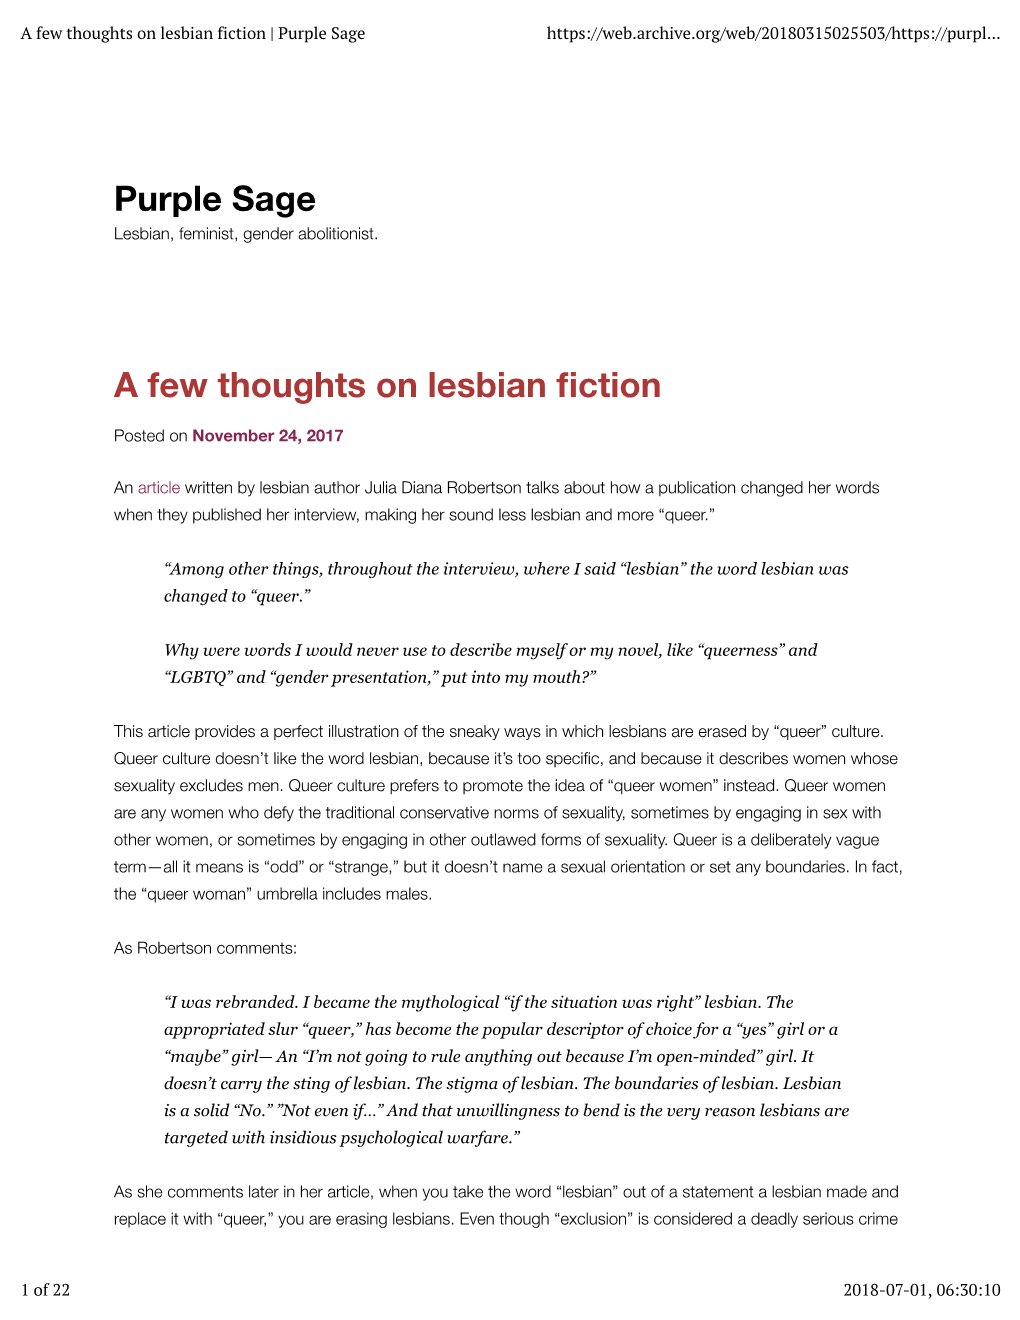 A Few Thoughts on Lesbian Fiction | Purple Sage